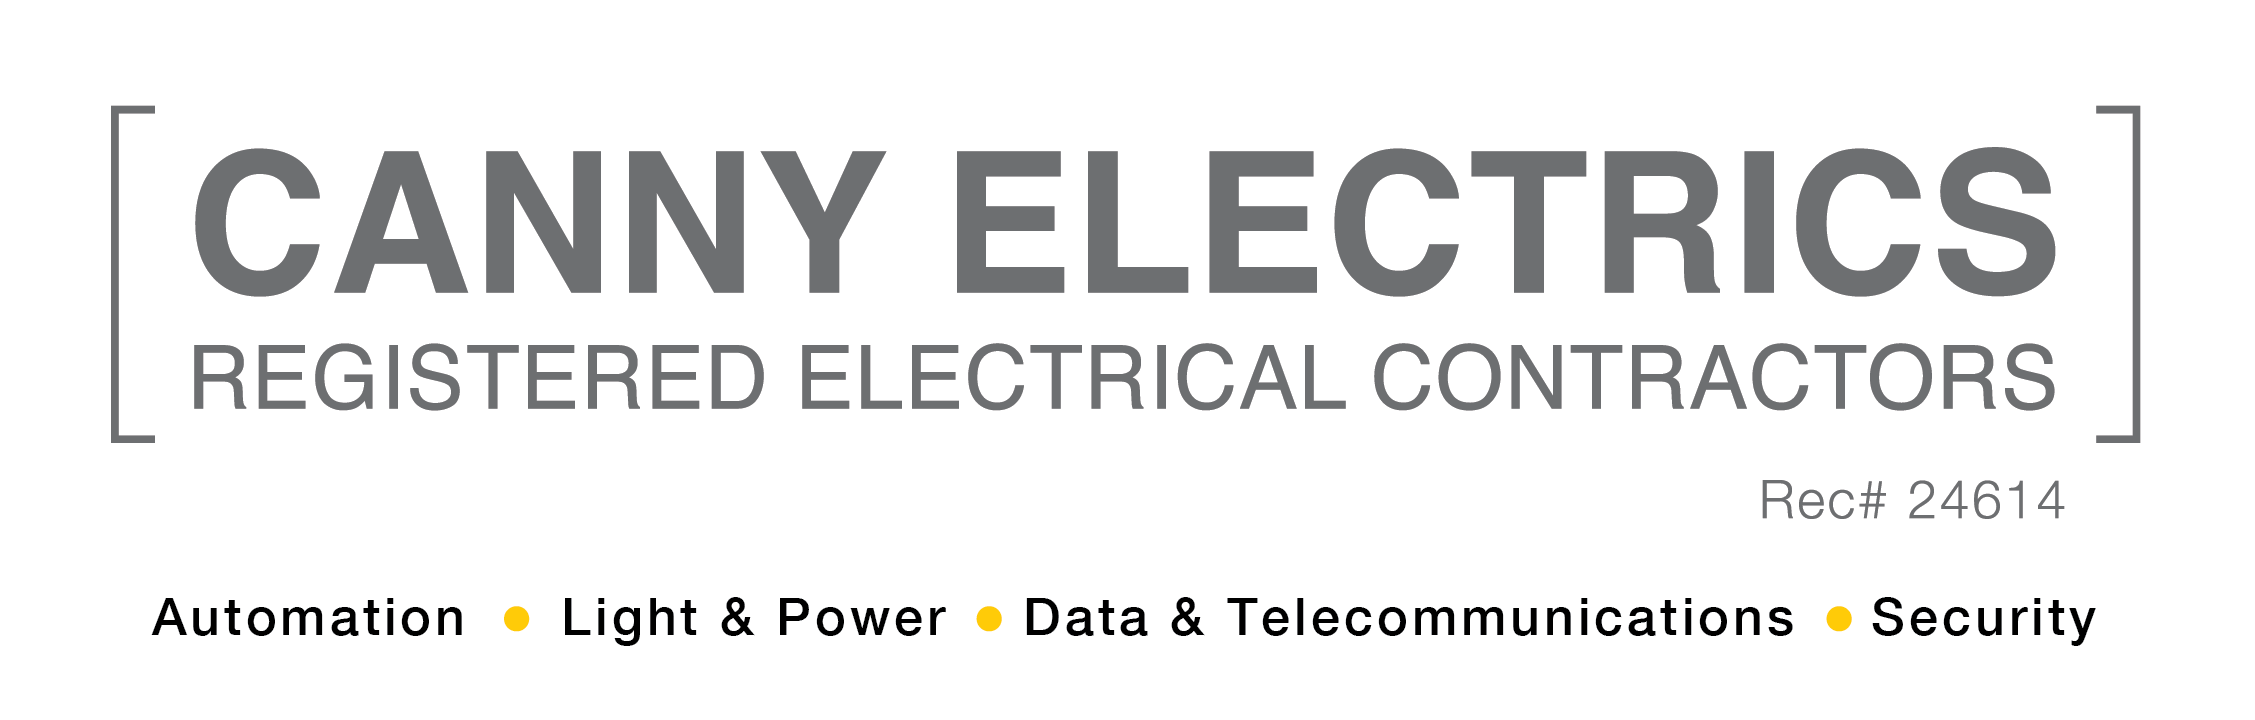 CANNY ELECTRICS logo Canny Electrics.png